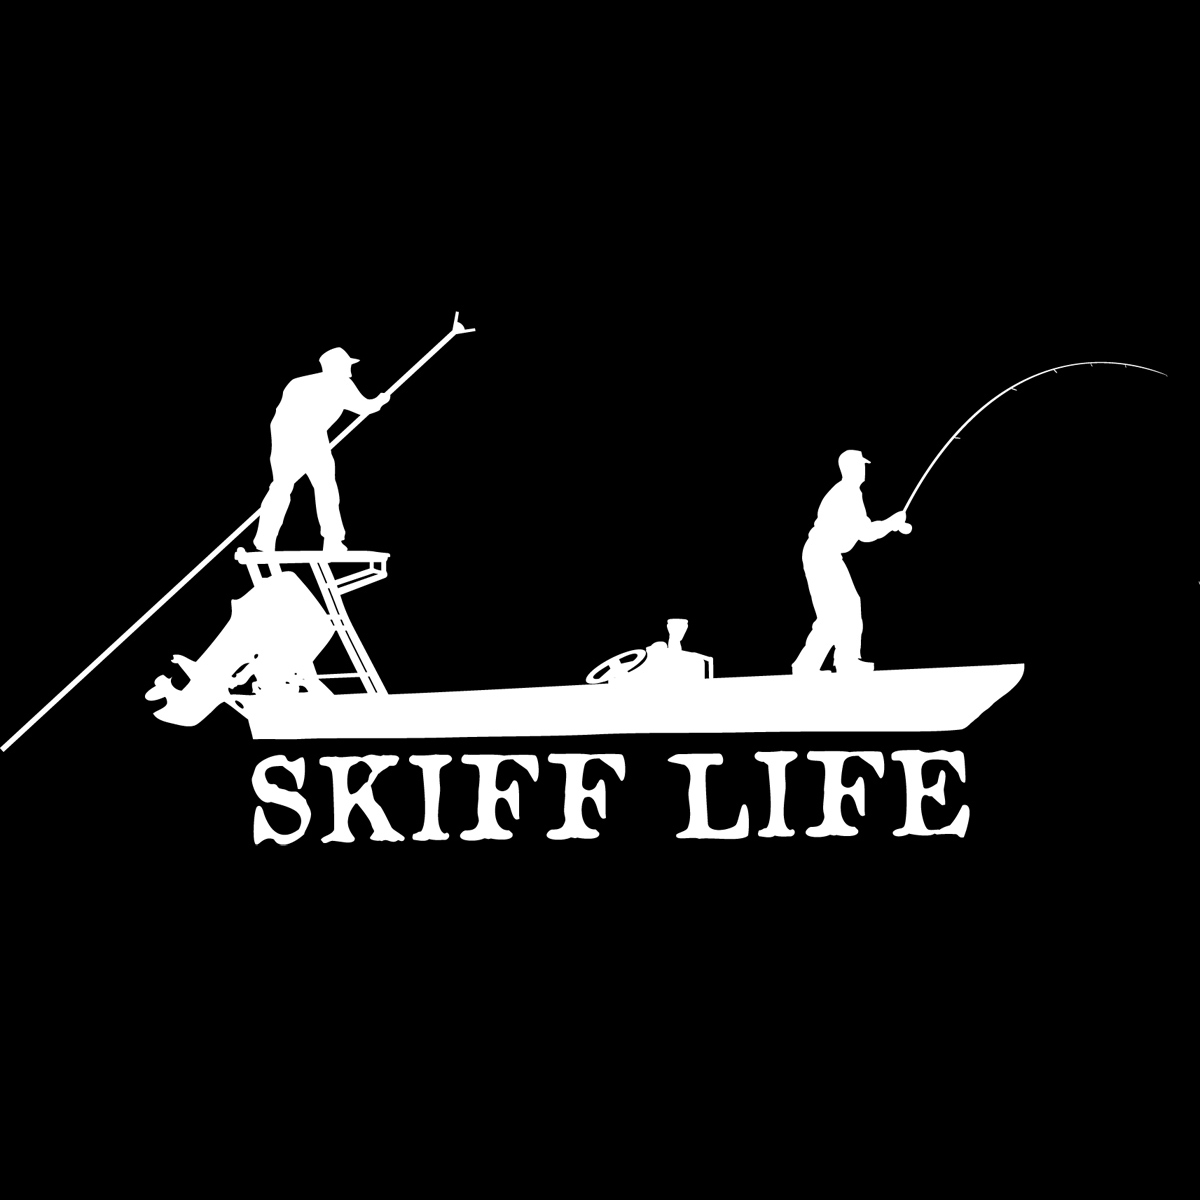 Skiff Life Poling Skiff Boat, Flats Fishing Decals Stickers - Skiff Life